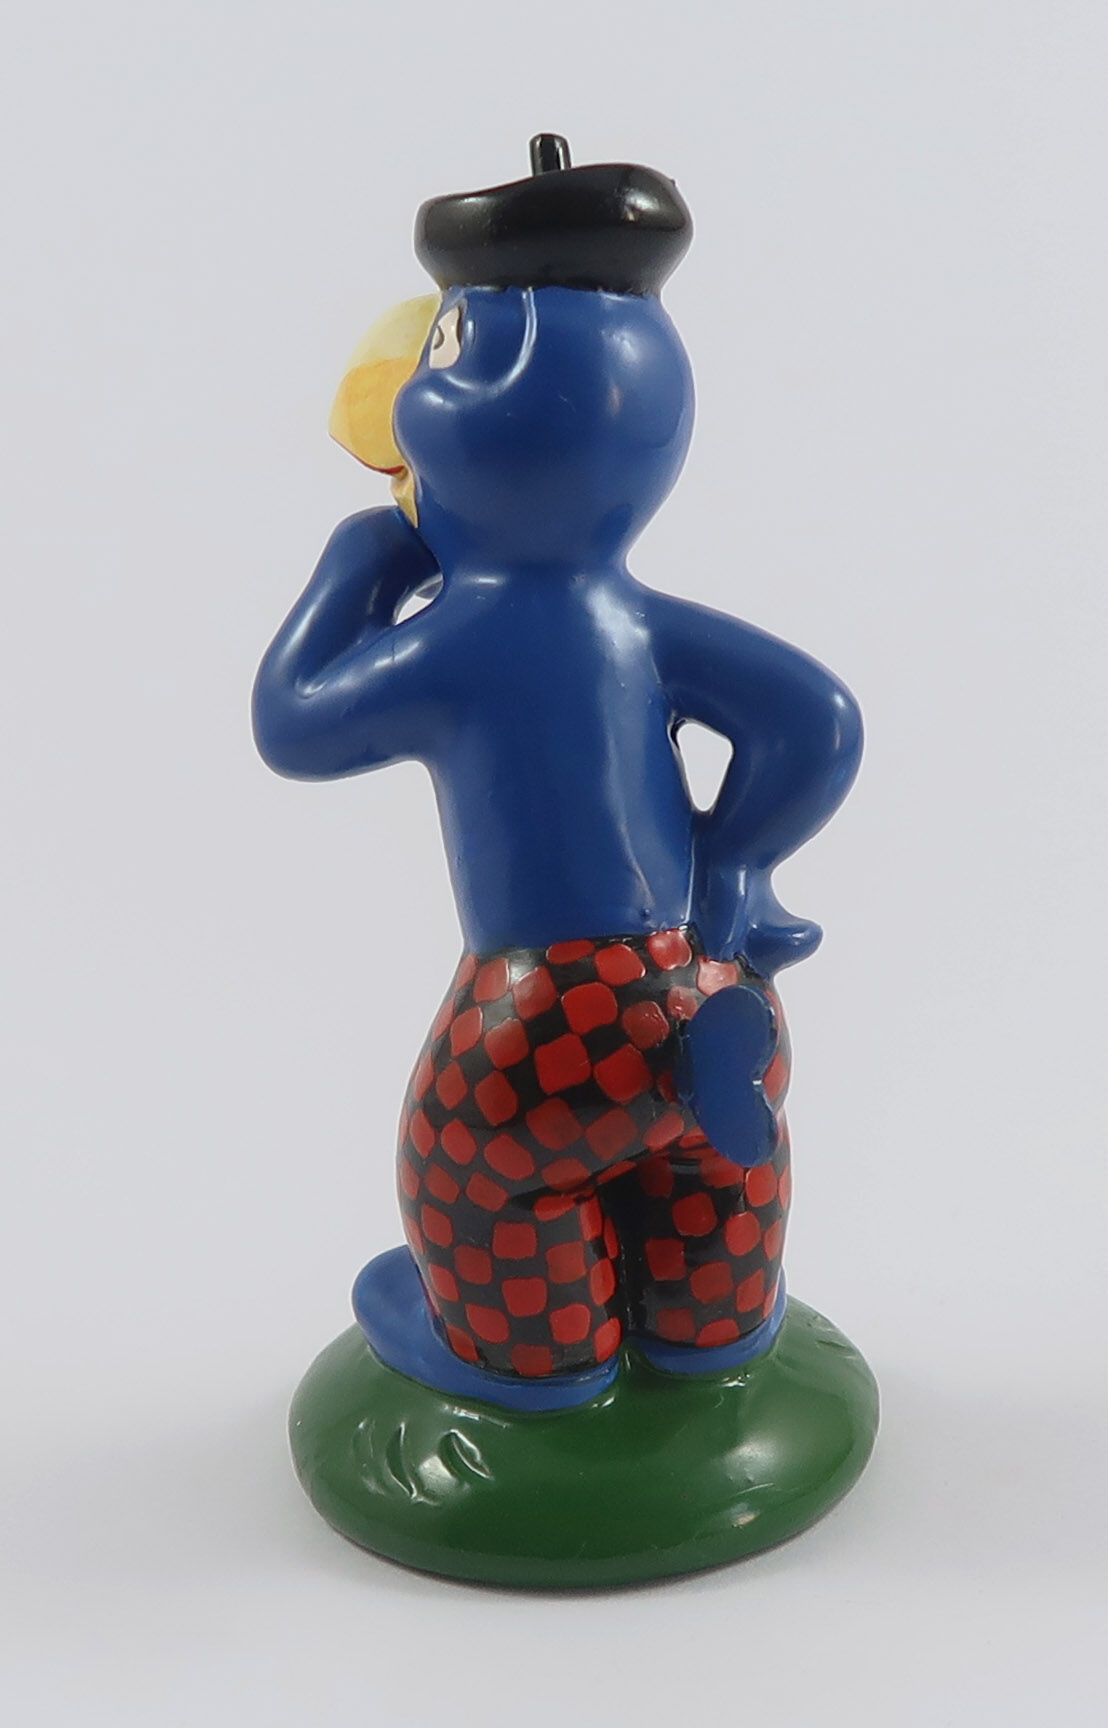 Globi Keramik Figur 1940er Jahre